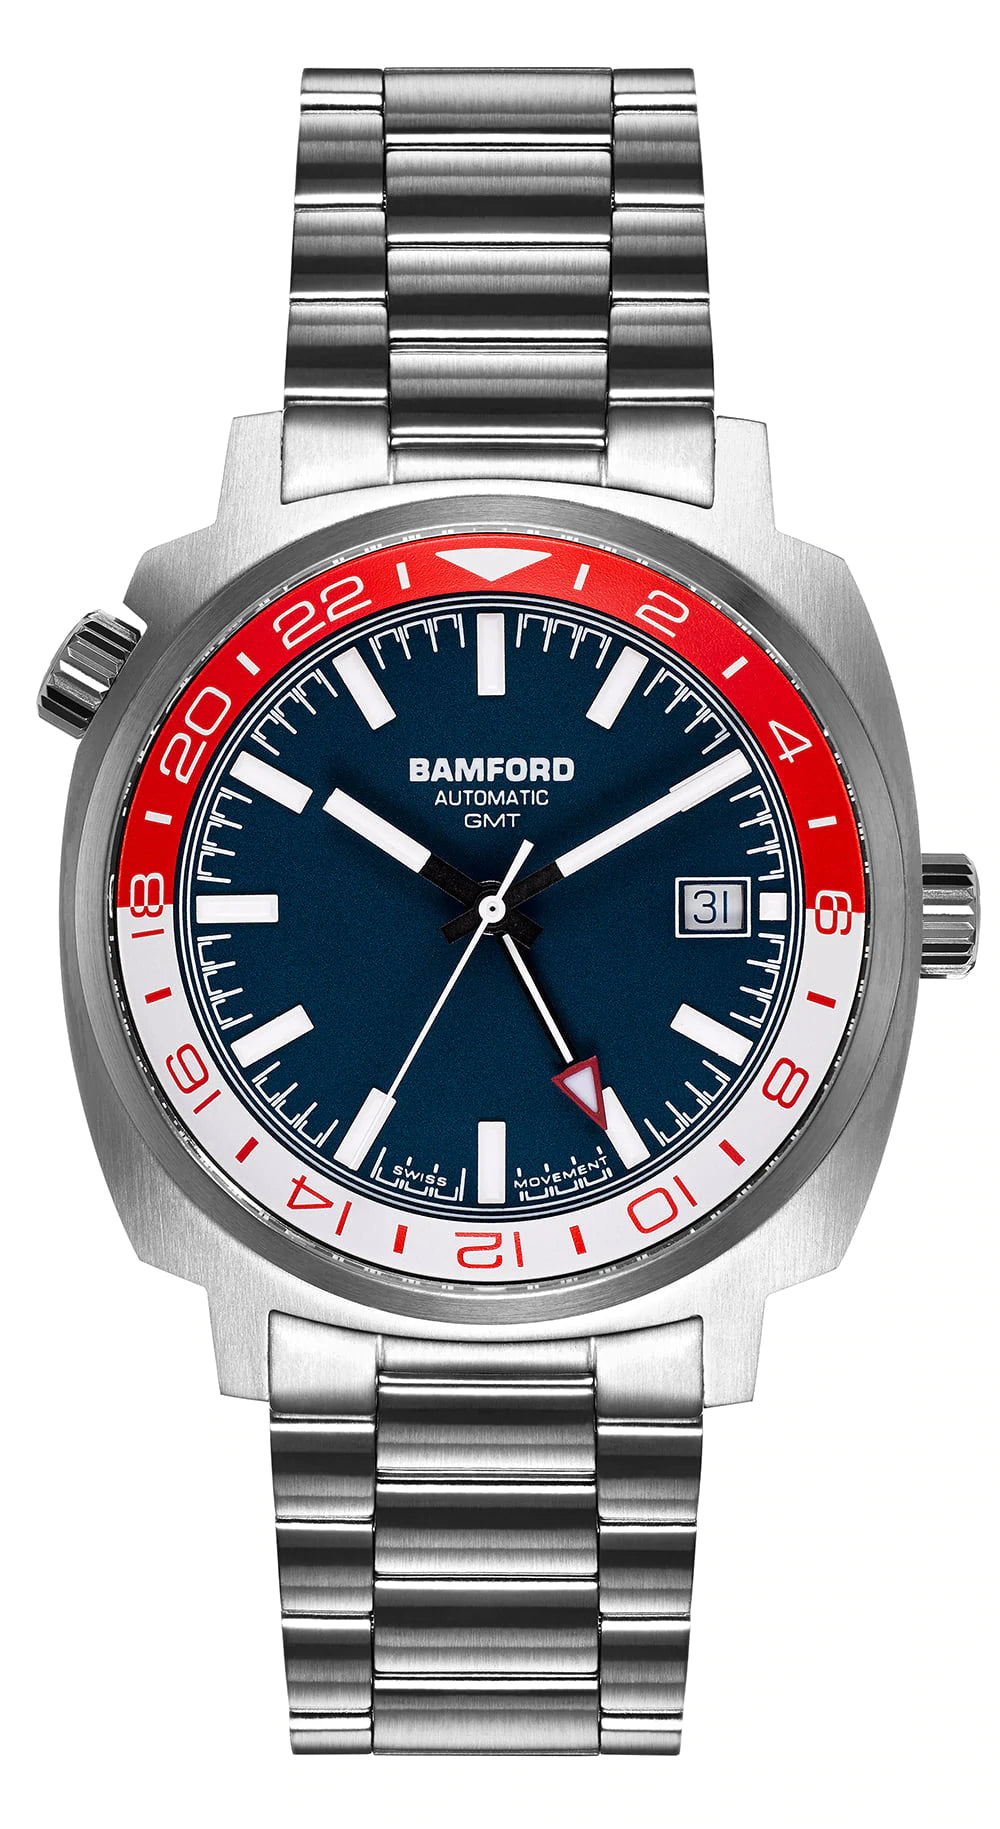 Bamford GMT watch